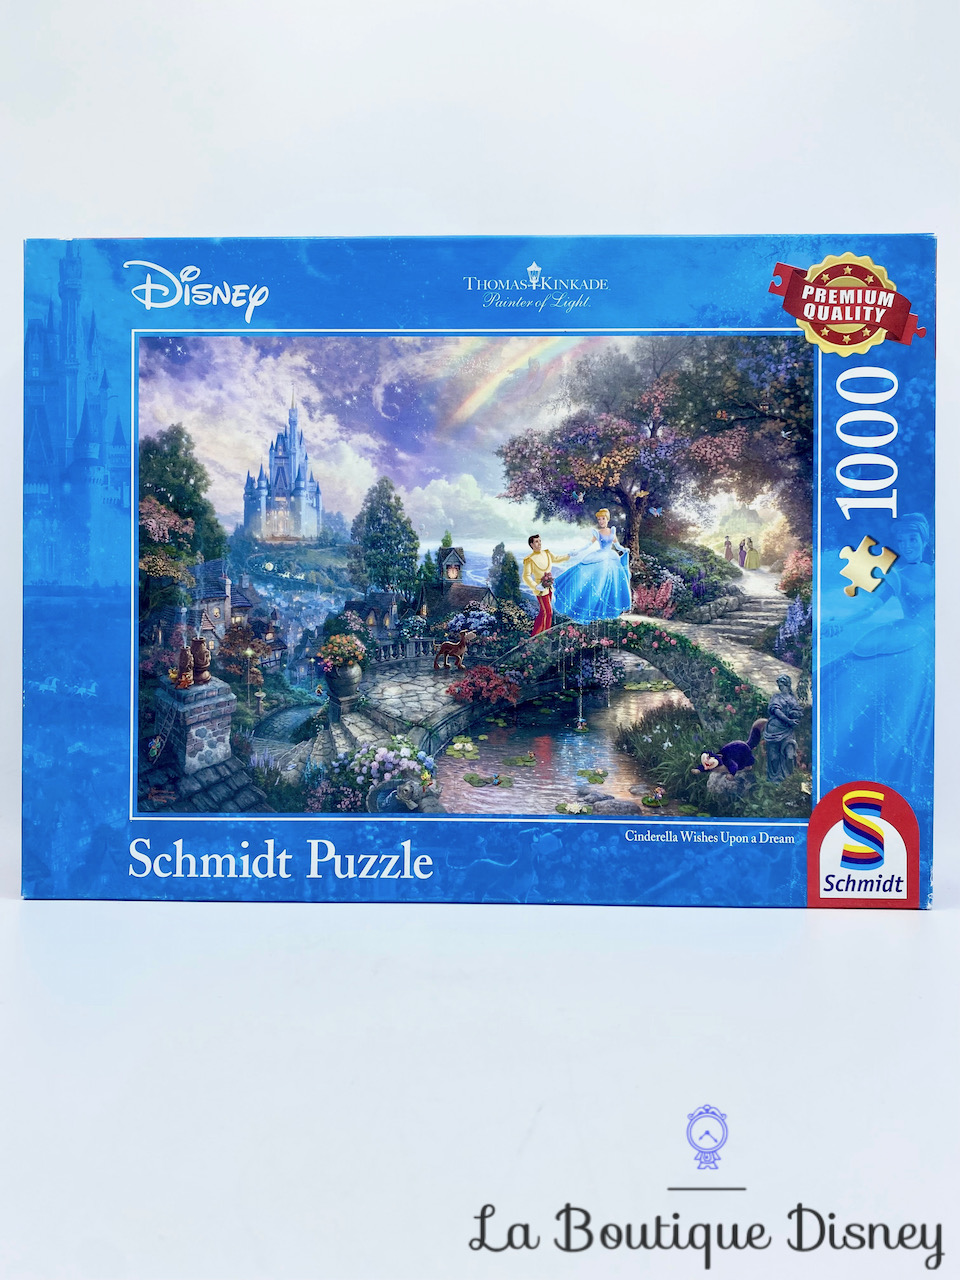 Puzzle 1000 pièces Cendrillon Thomas Kinkade Painter of Light Disney Schmidt N°59472 Cinderella Wishes Upon a Dream